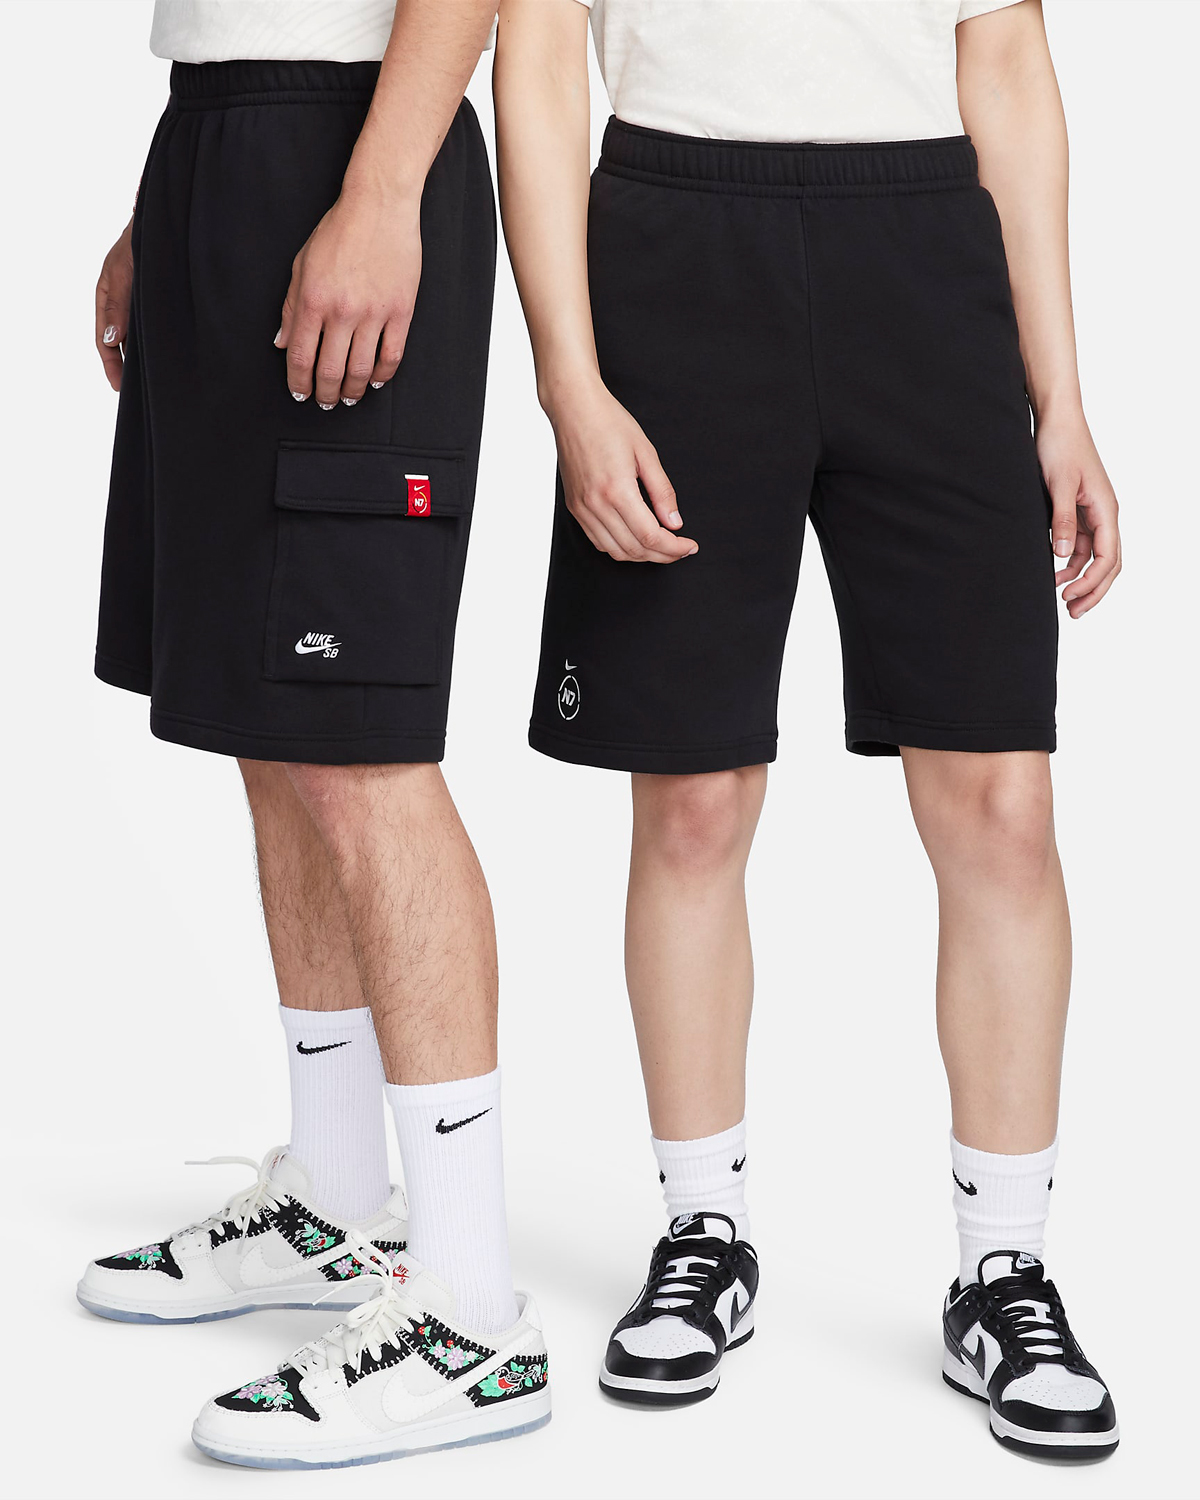 Nike-SB-Dunk-Low-N7-Shorts